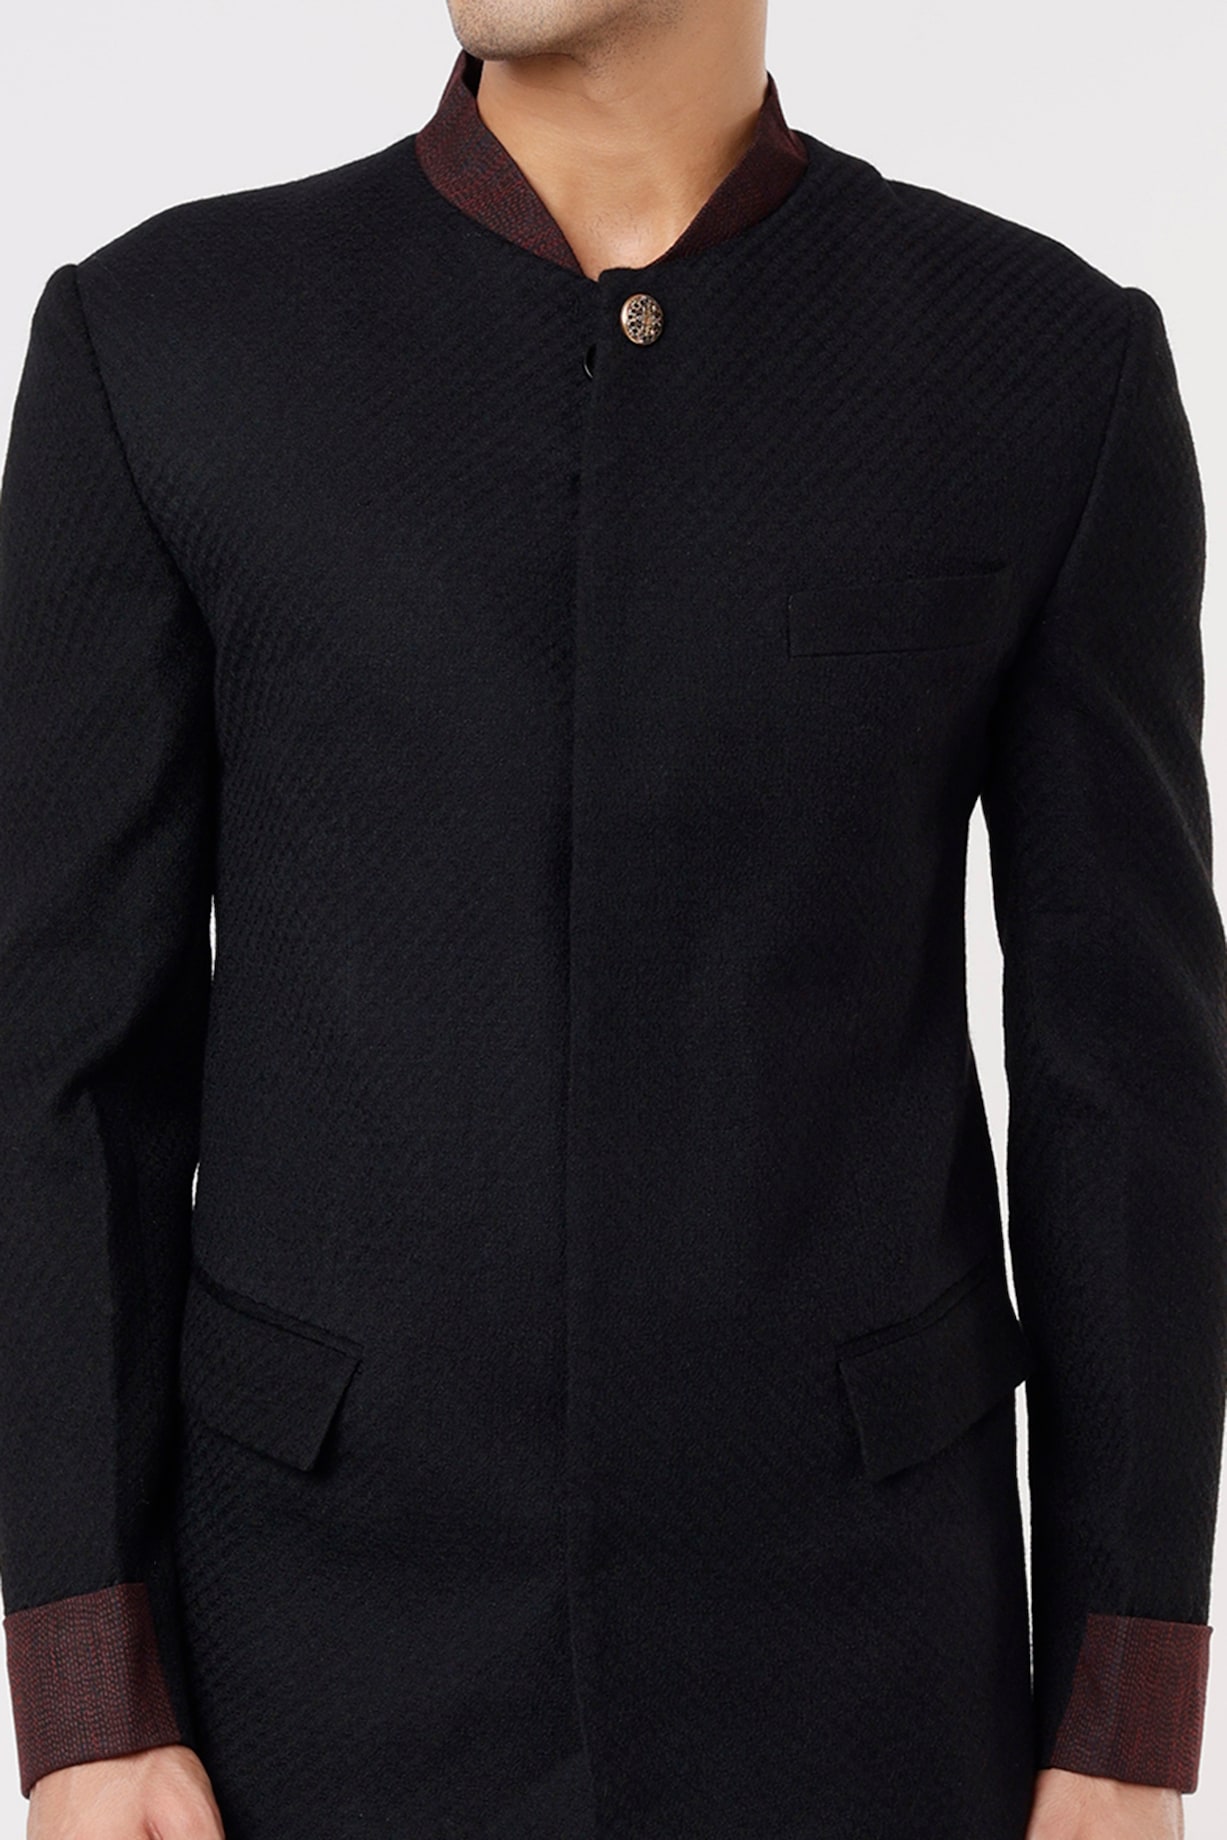 Black Textured Fabric Bandhgala Jacket Set by Jatin Malik